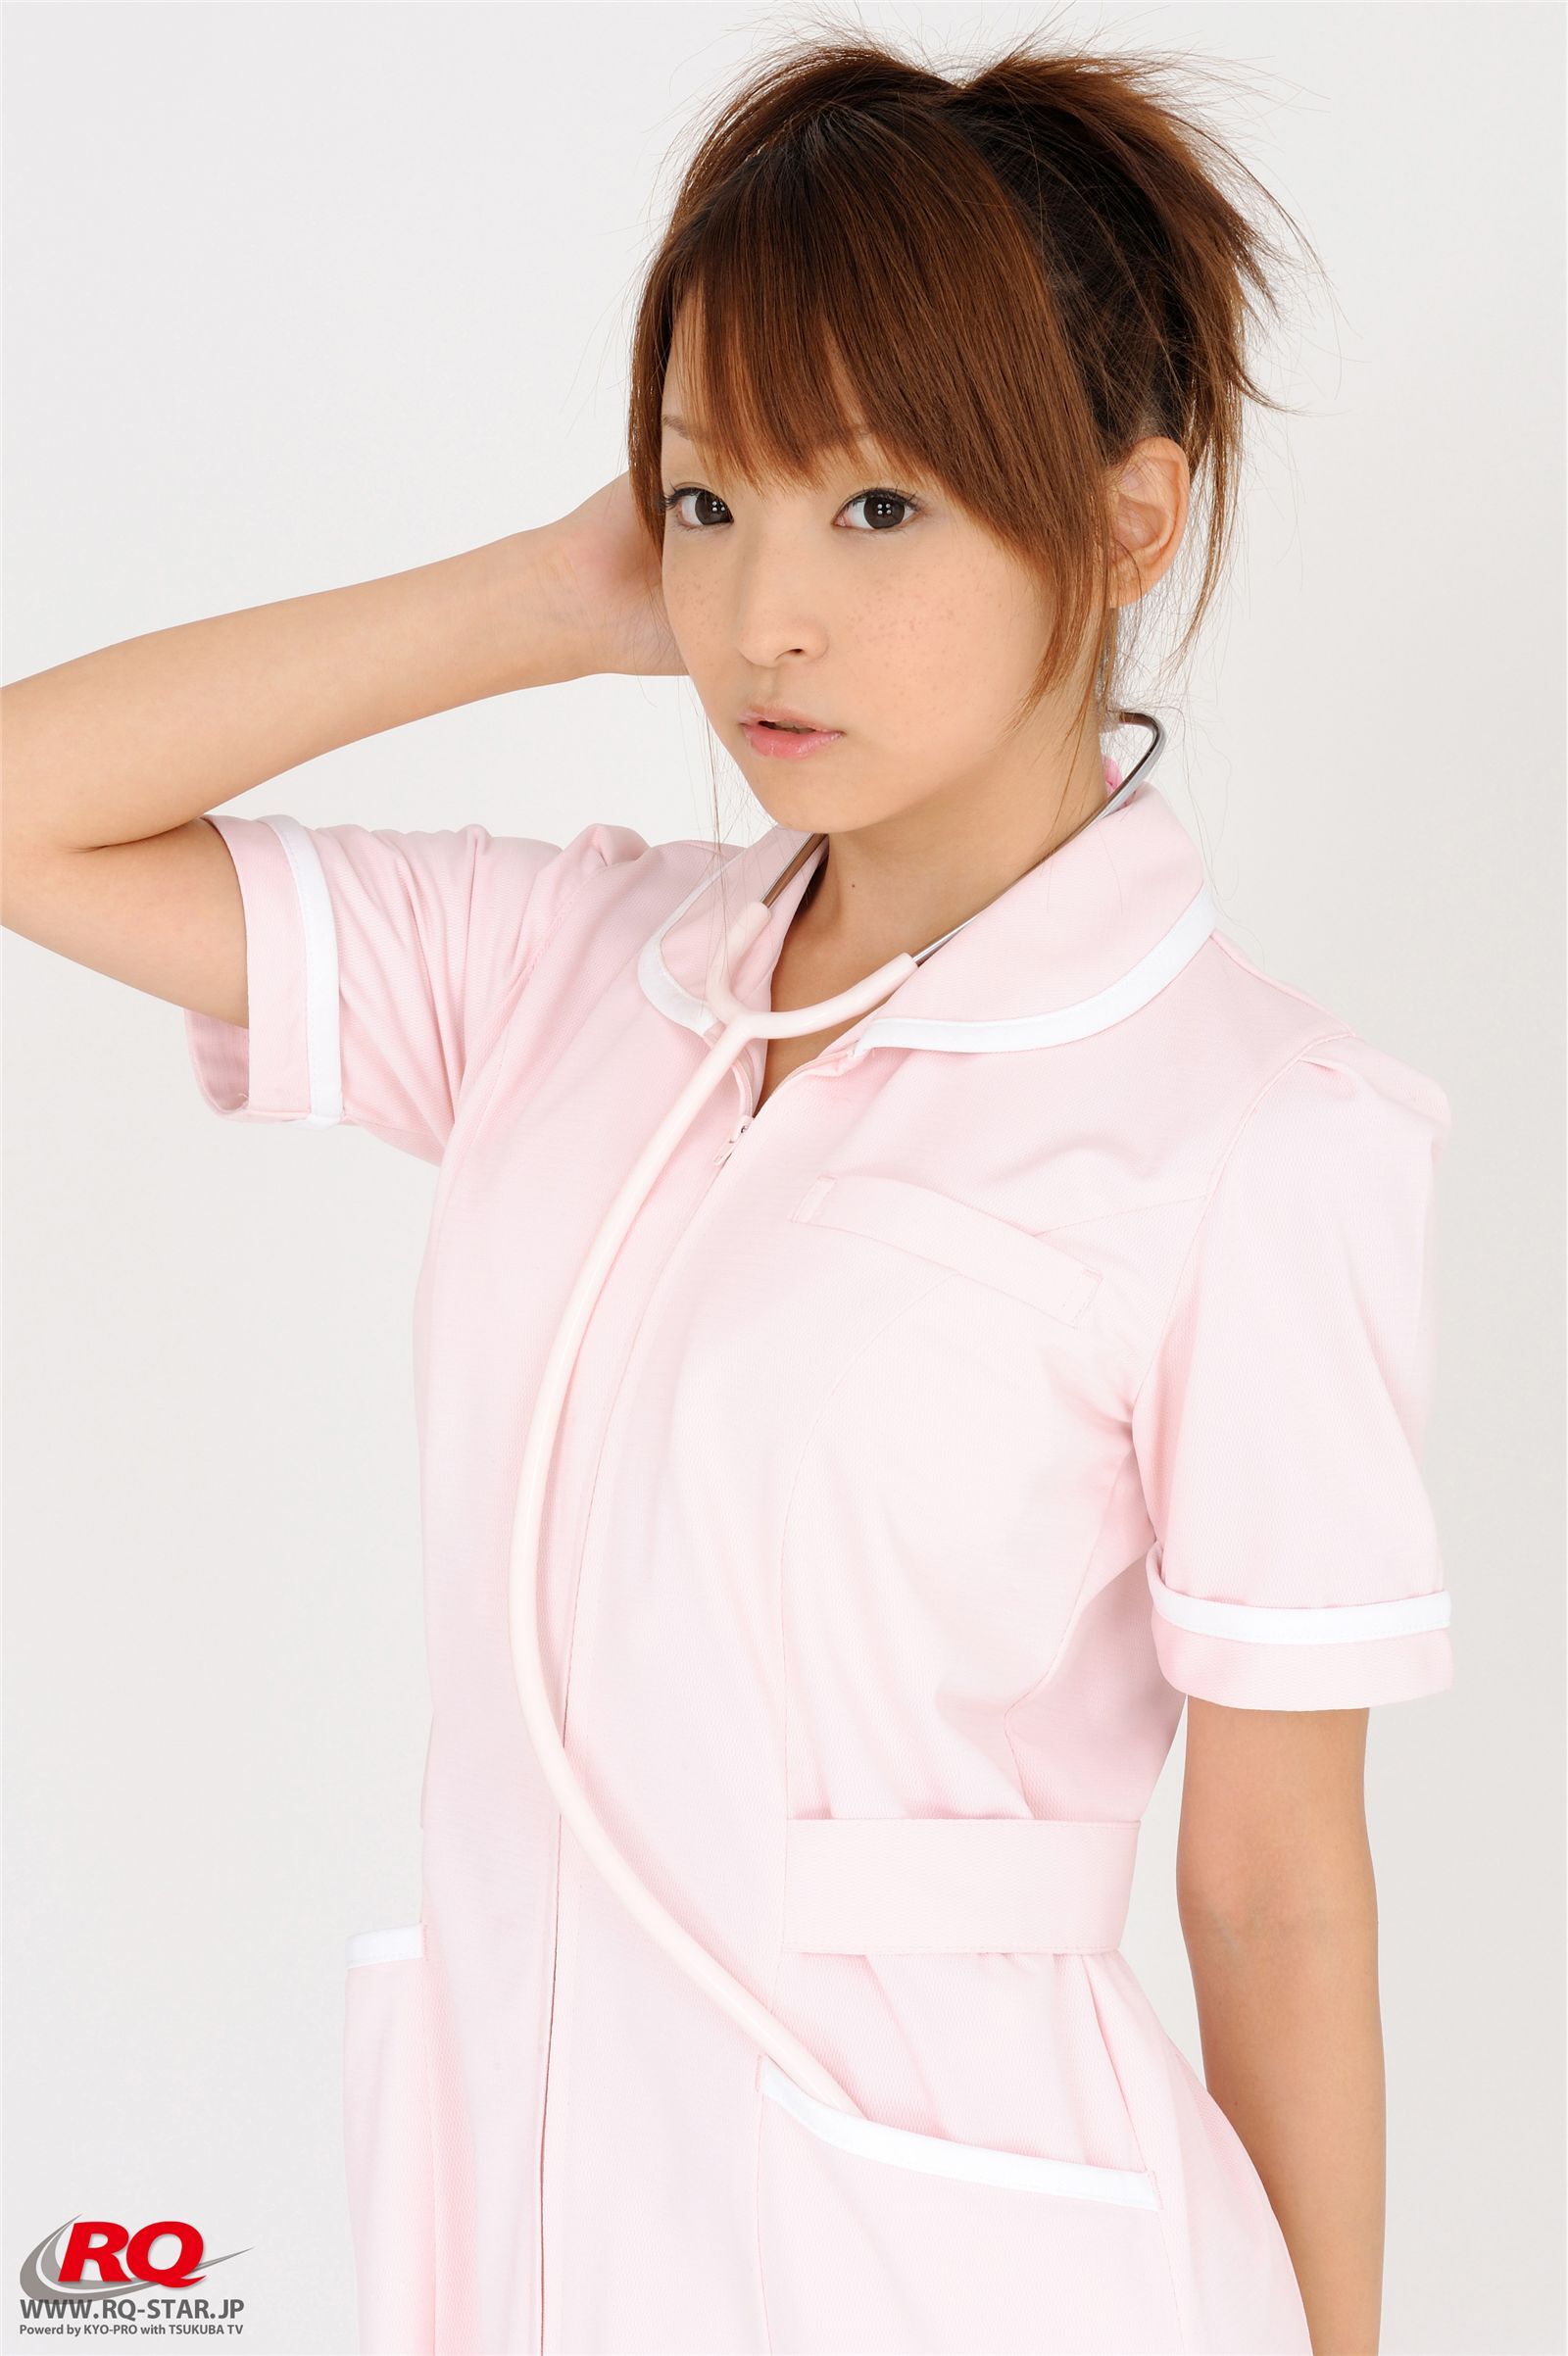 [RQ-STAR]2016.02.17 NO.01158 Mio Aoki 青木未央 Nurse Costume